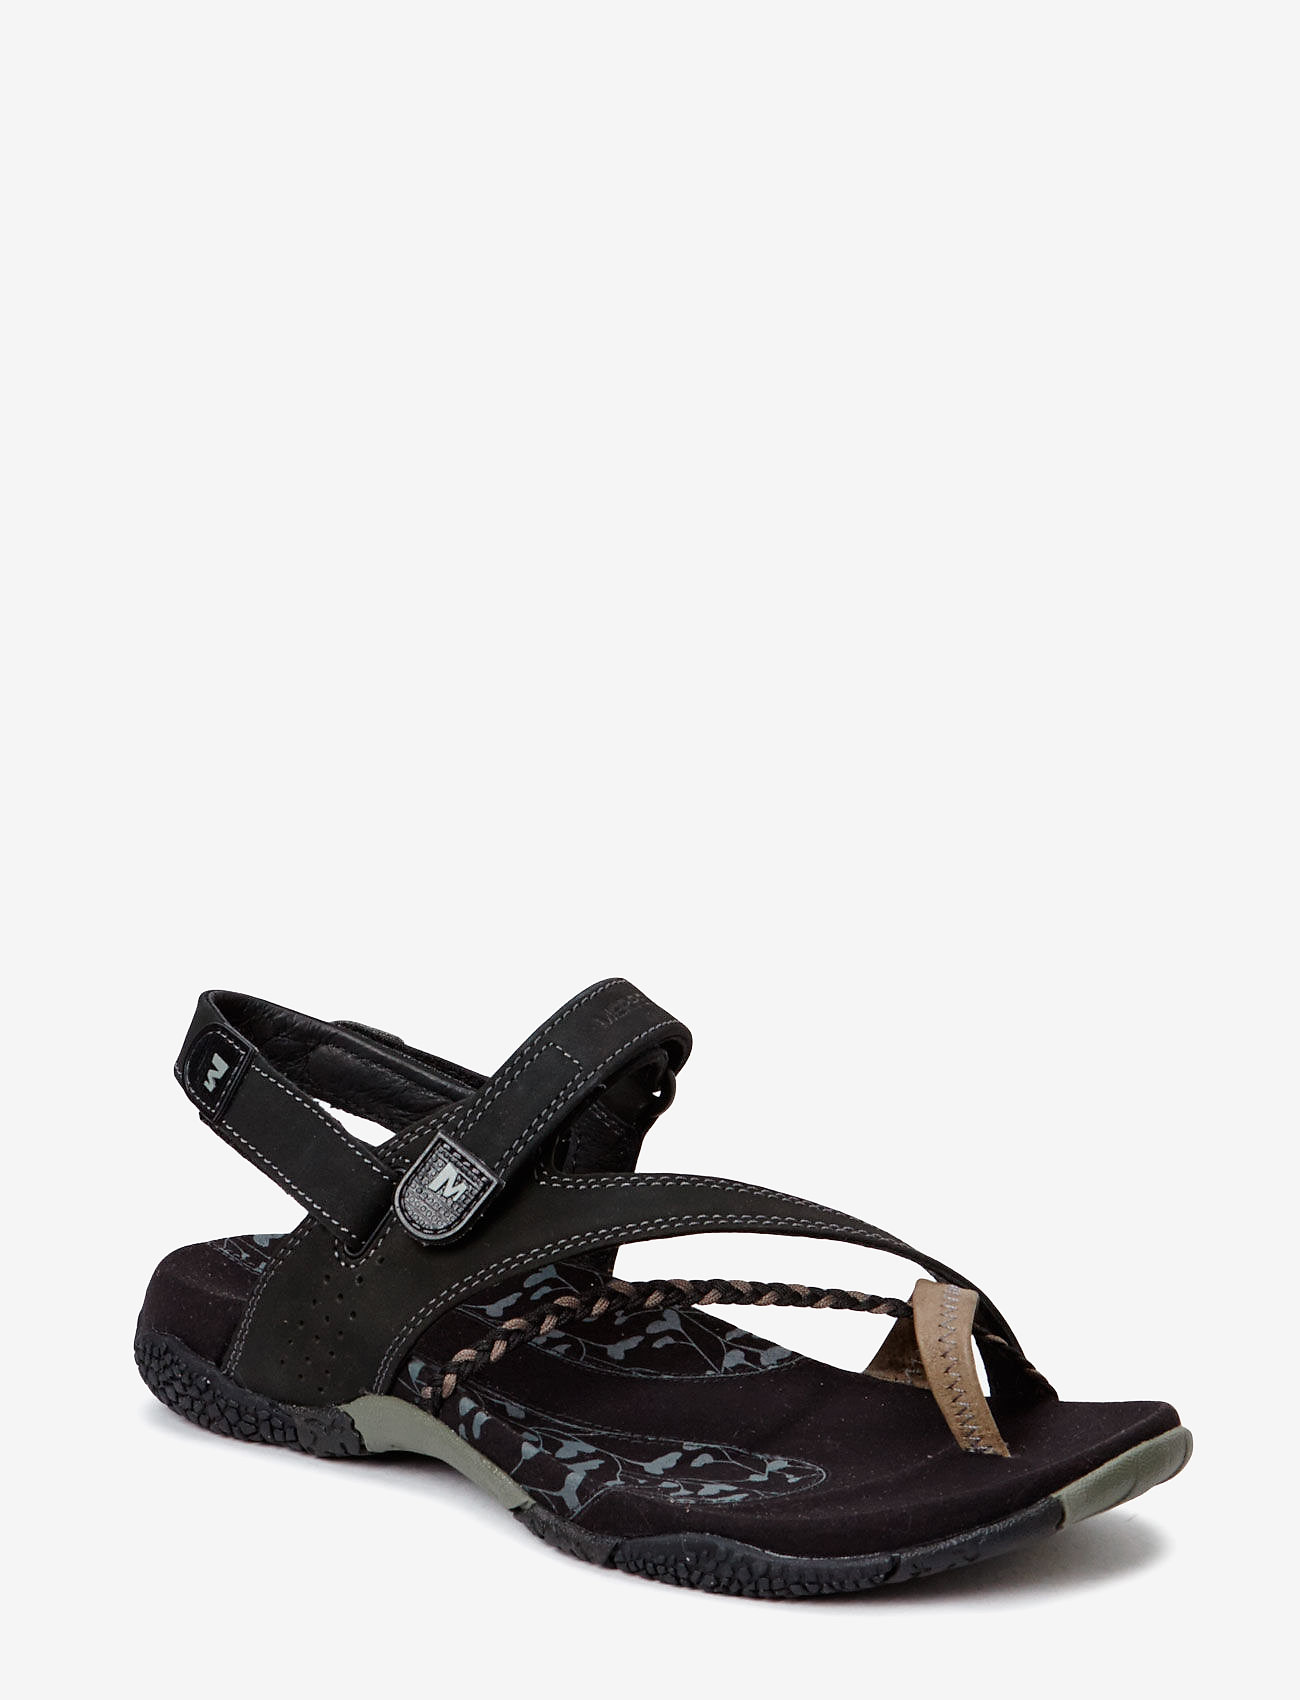 Merrell - Women's Siena - Black - hiking sandals - black - 0